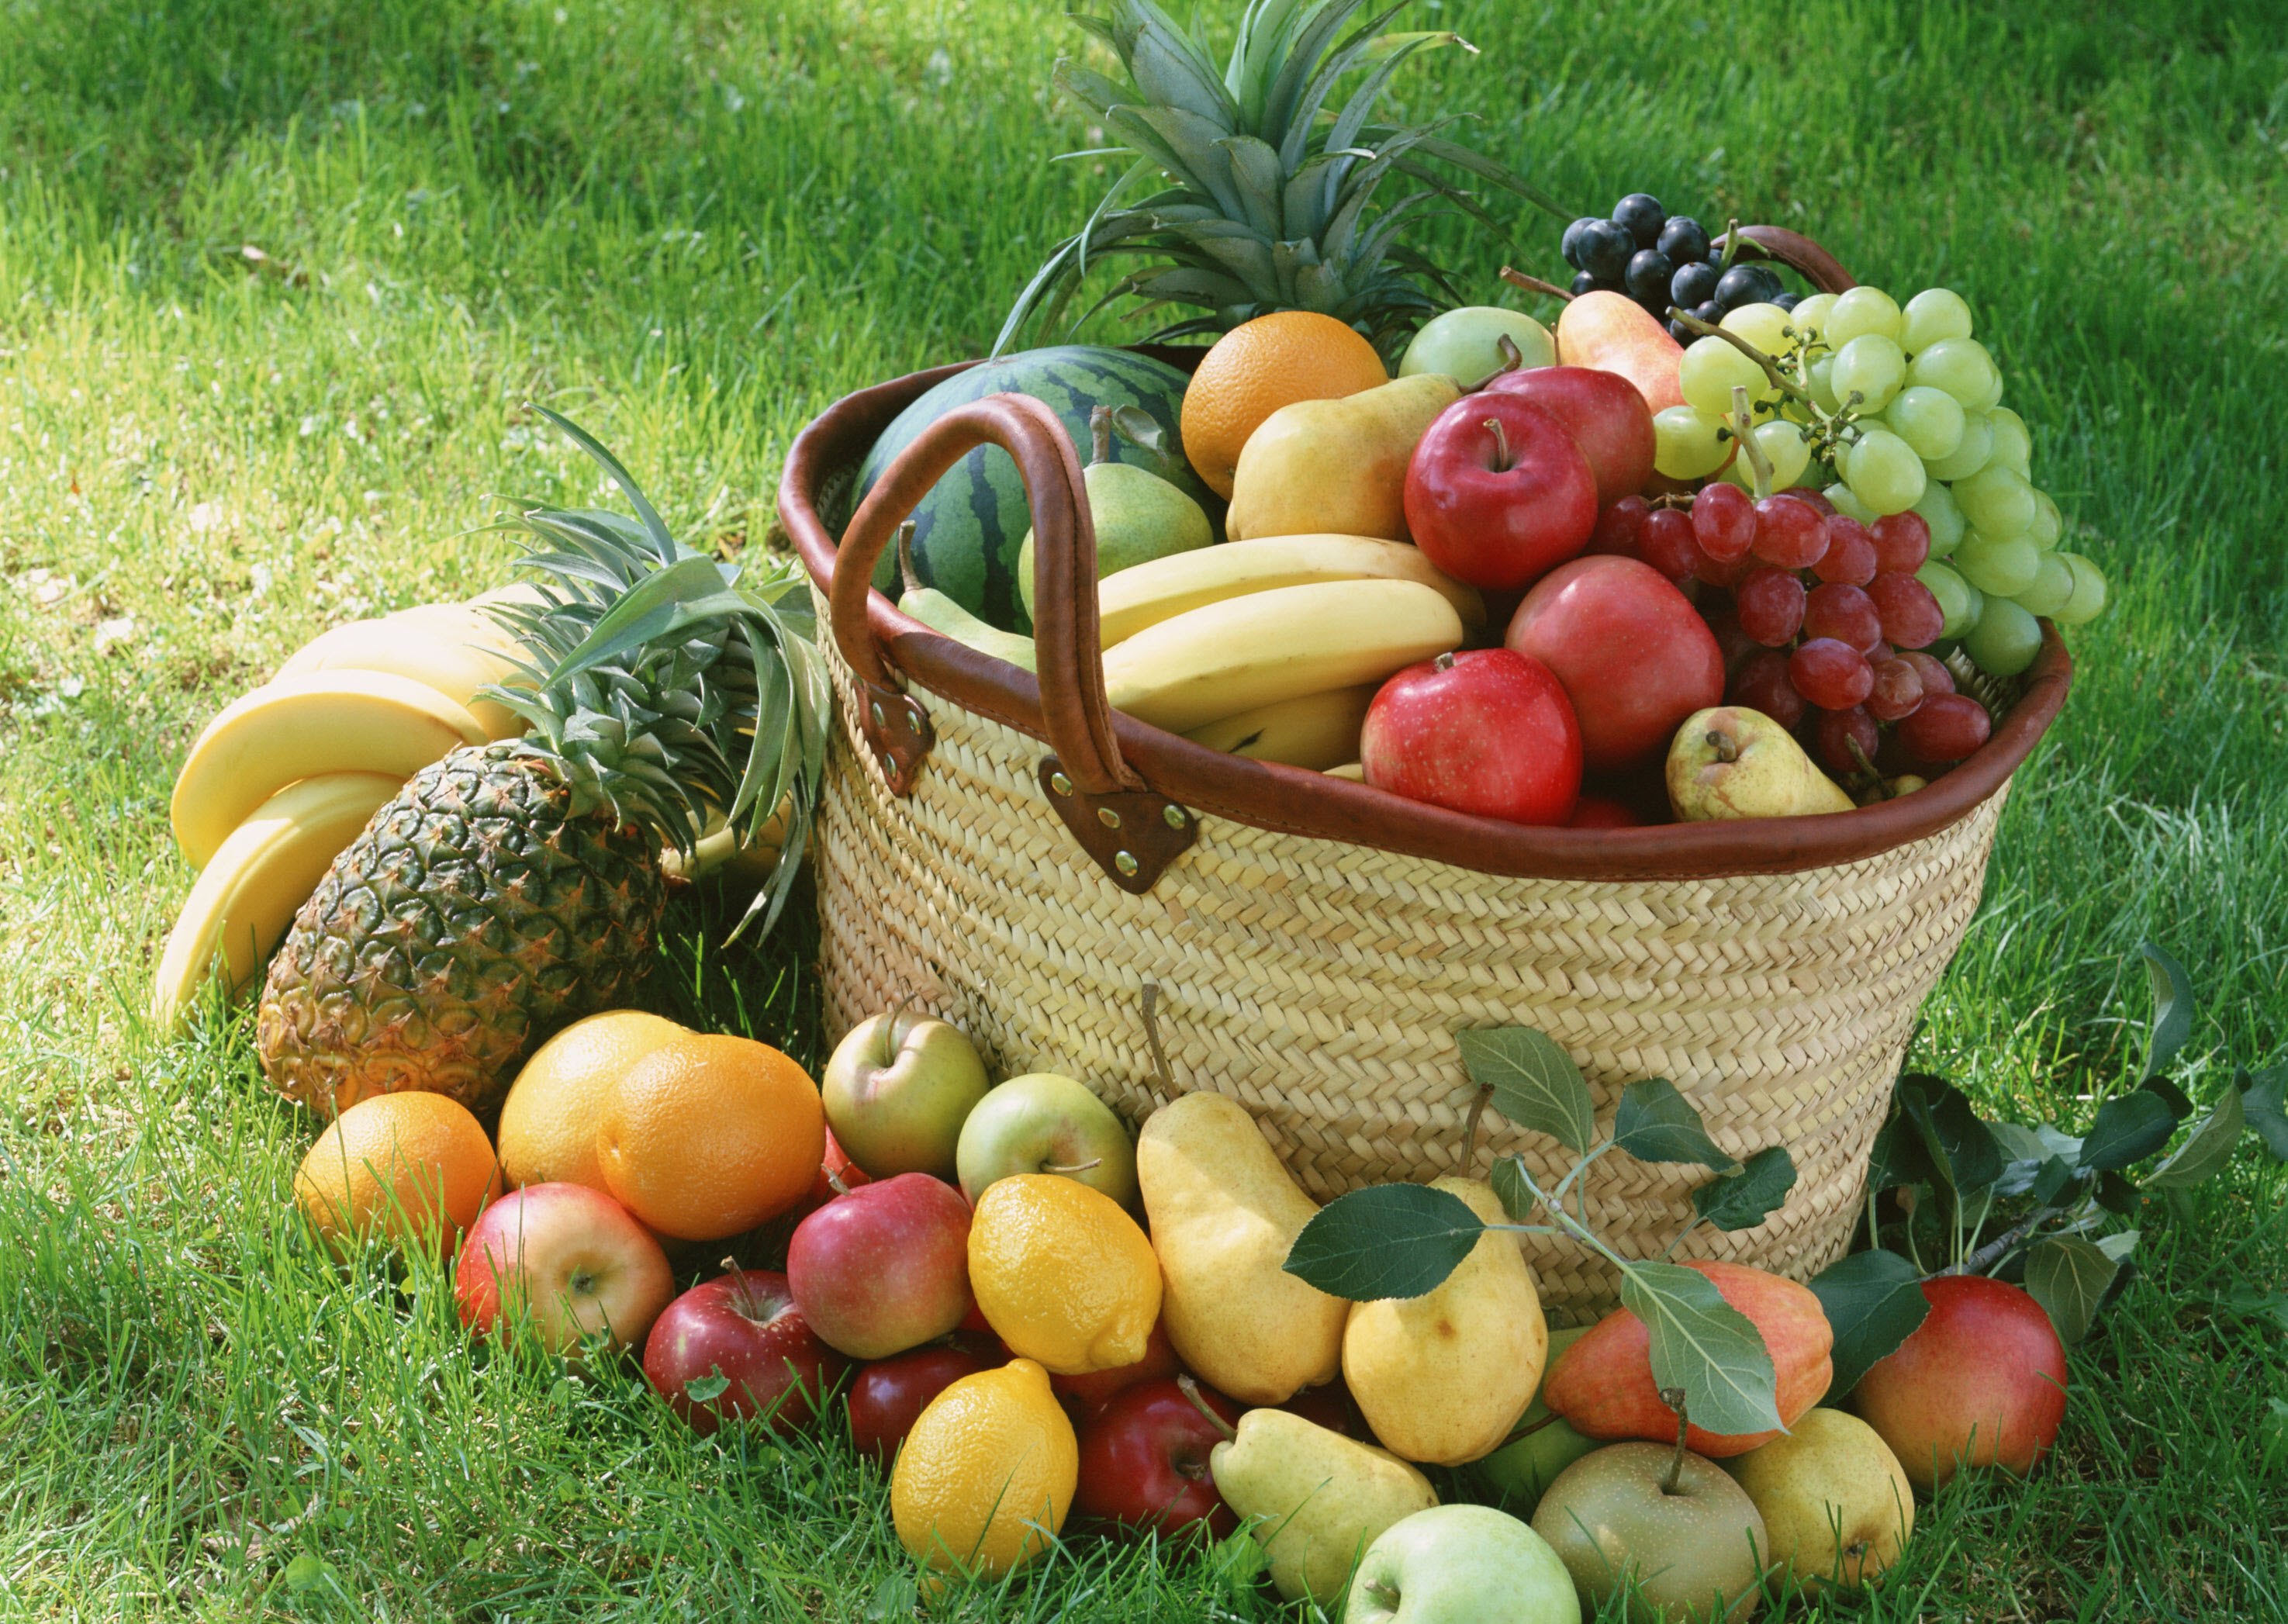 orange (fruit), lemon, fruits, food, fruit, apple, banana, basket, grapes, pear, pineapple